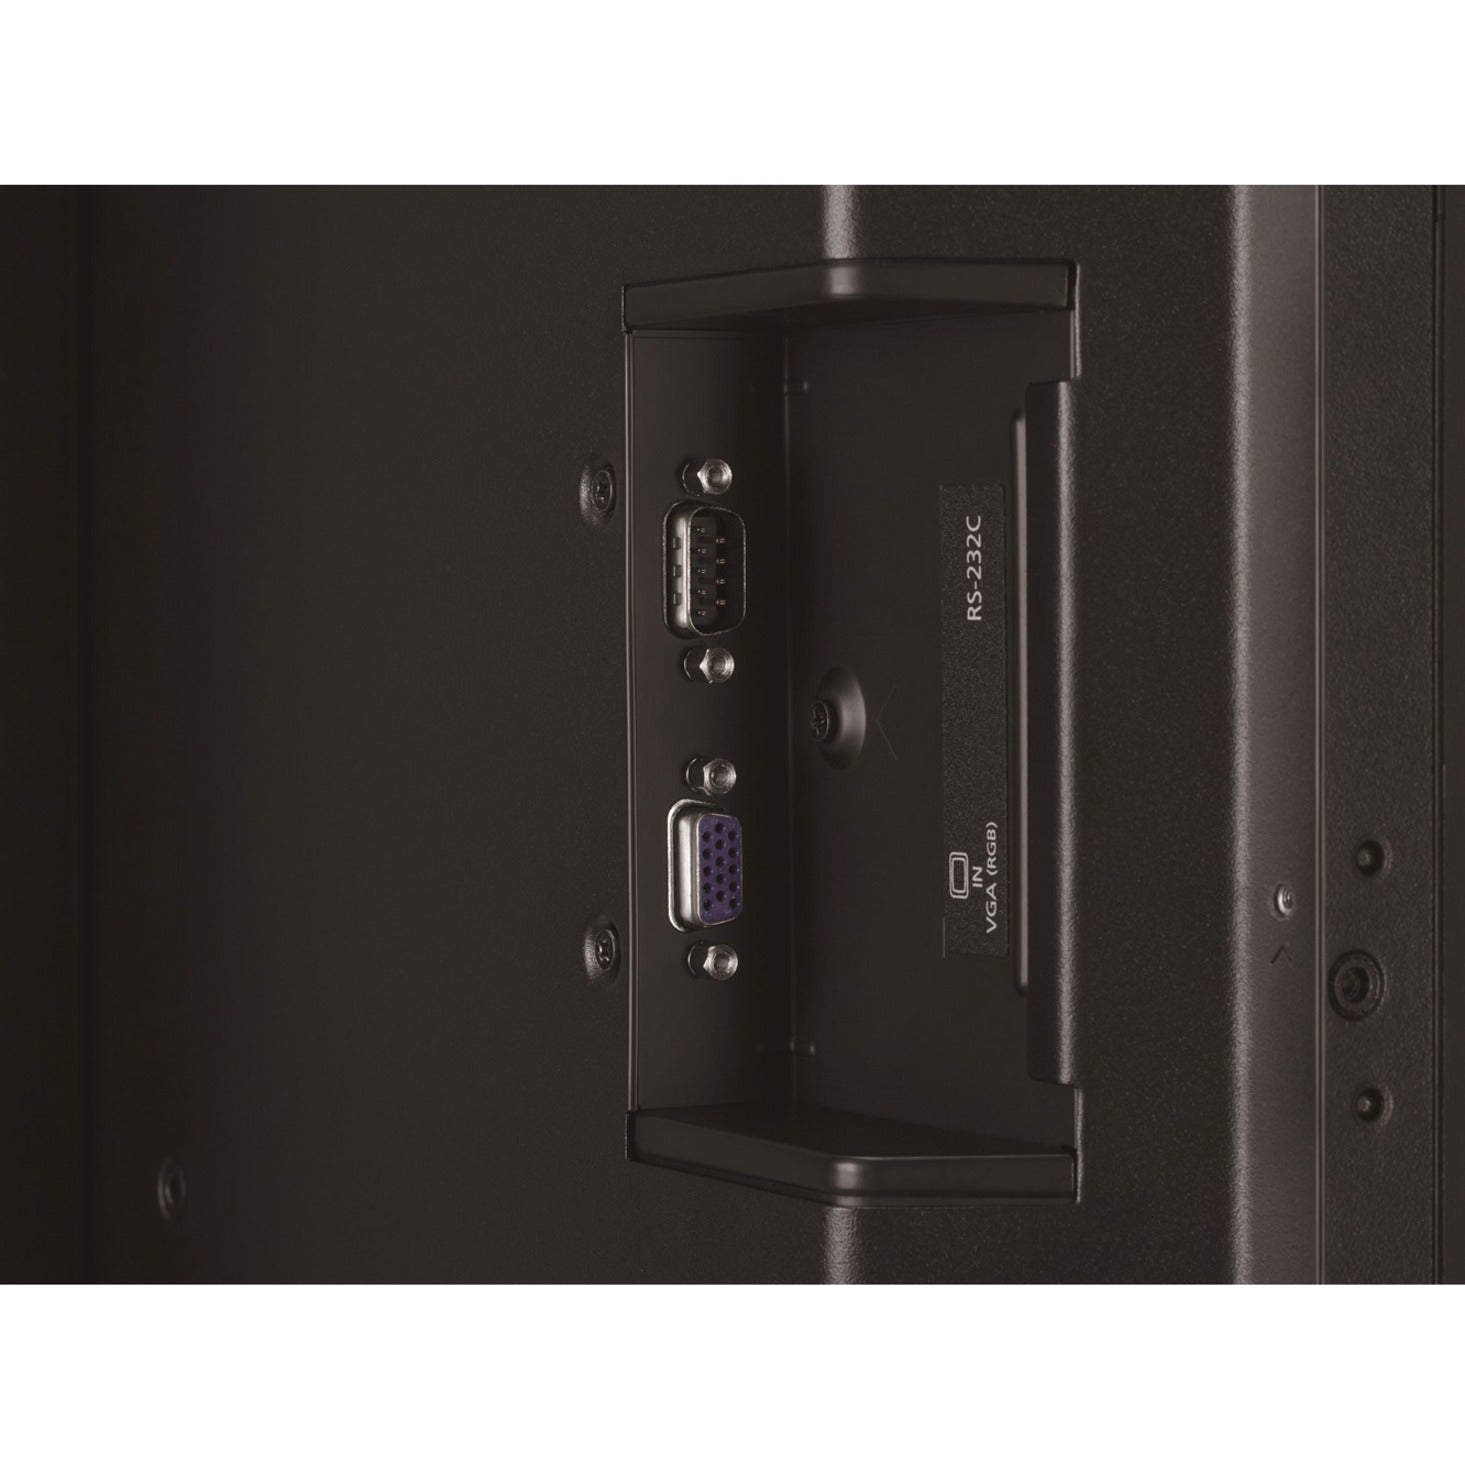 Sharp NEC Display M321 32" Professional Grade Display, High Dynamic Range, 450 Nit Brightness, 1080p Scan Format